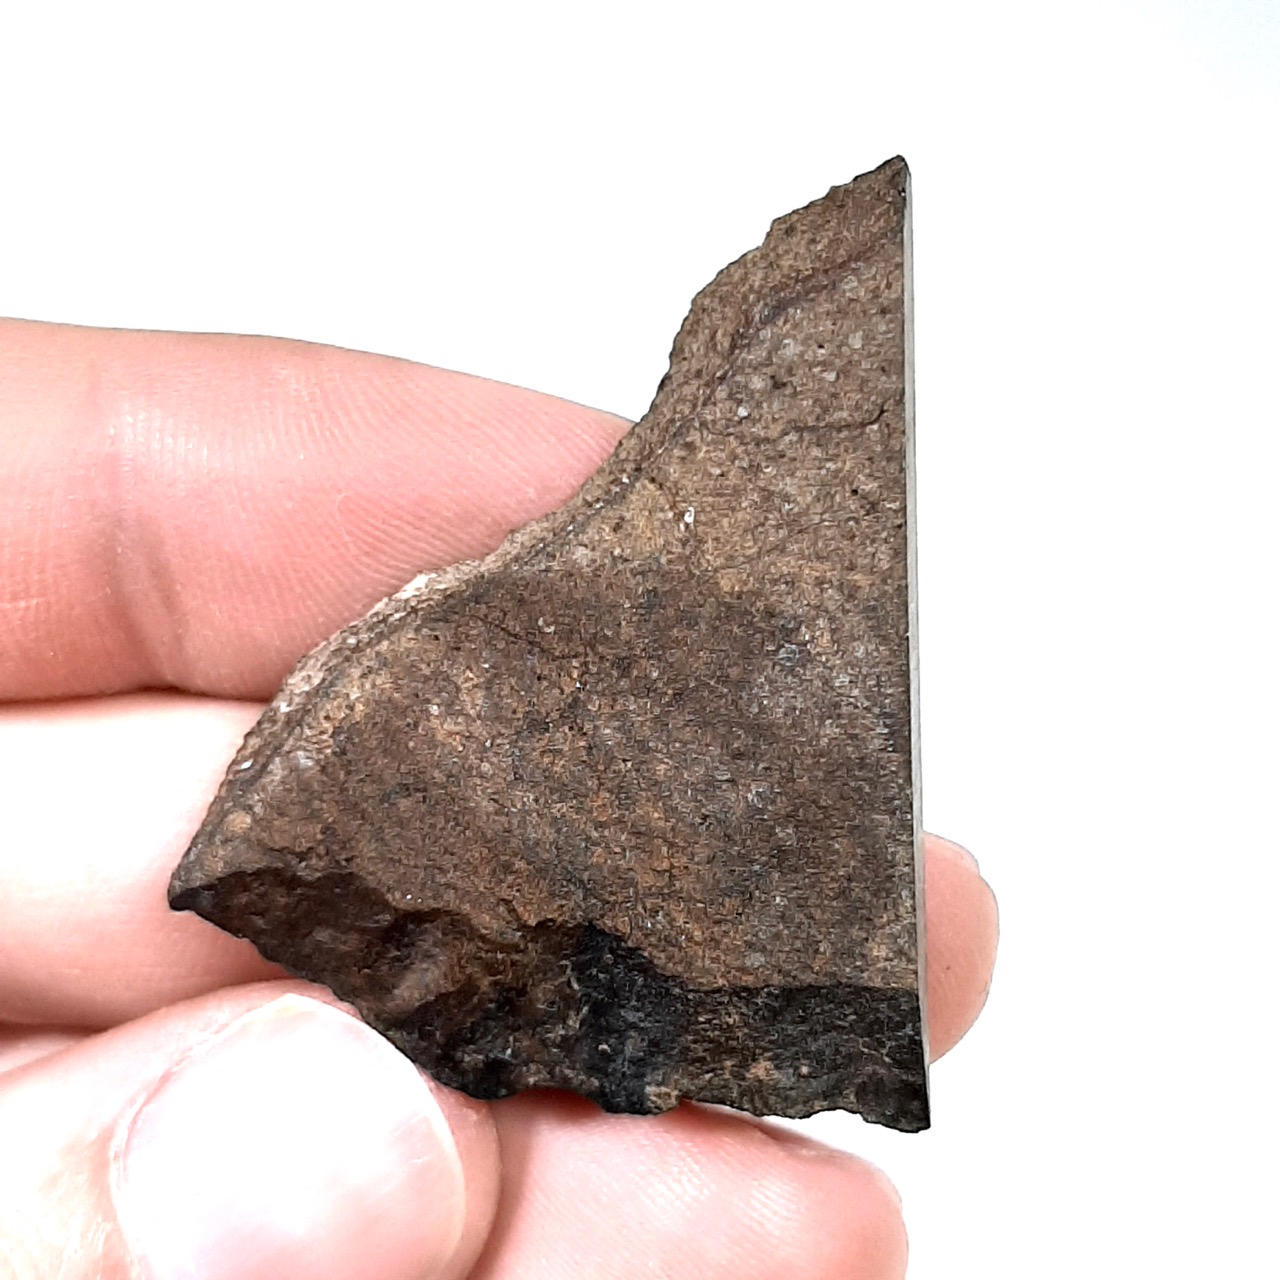 Boolka meteorite. Australian H5 chondrite.